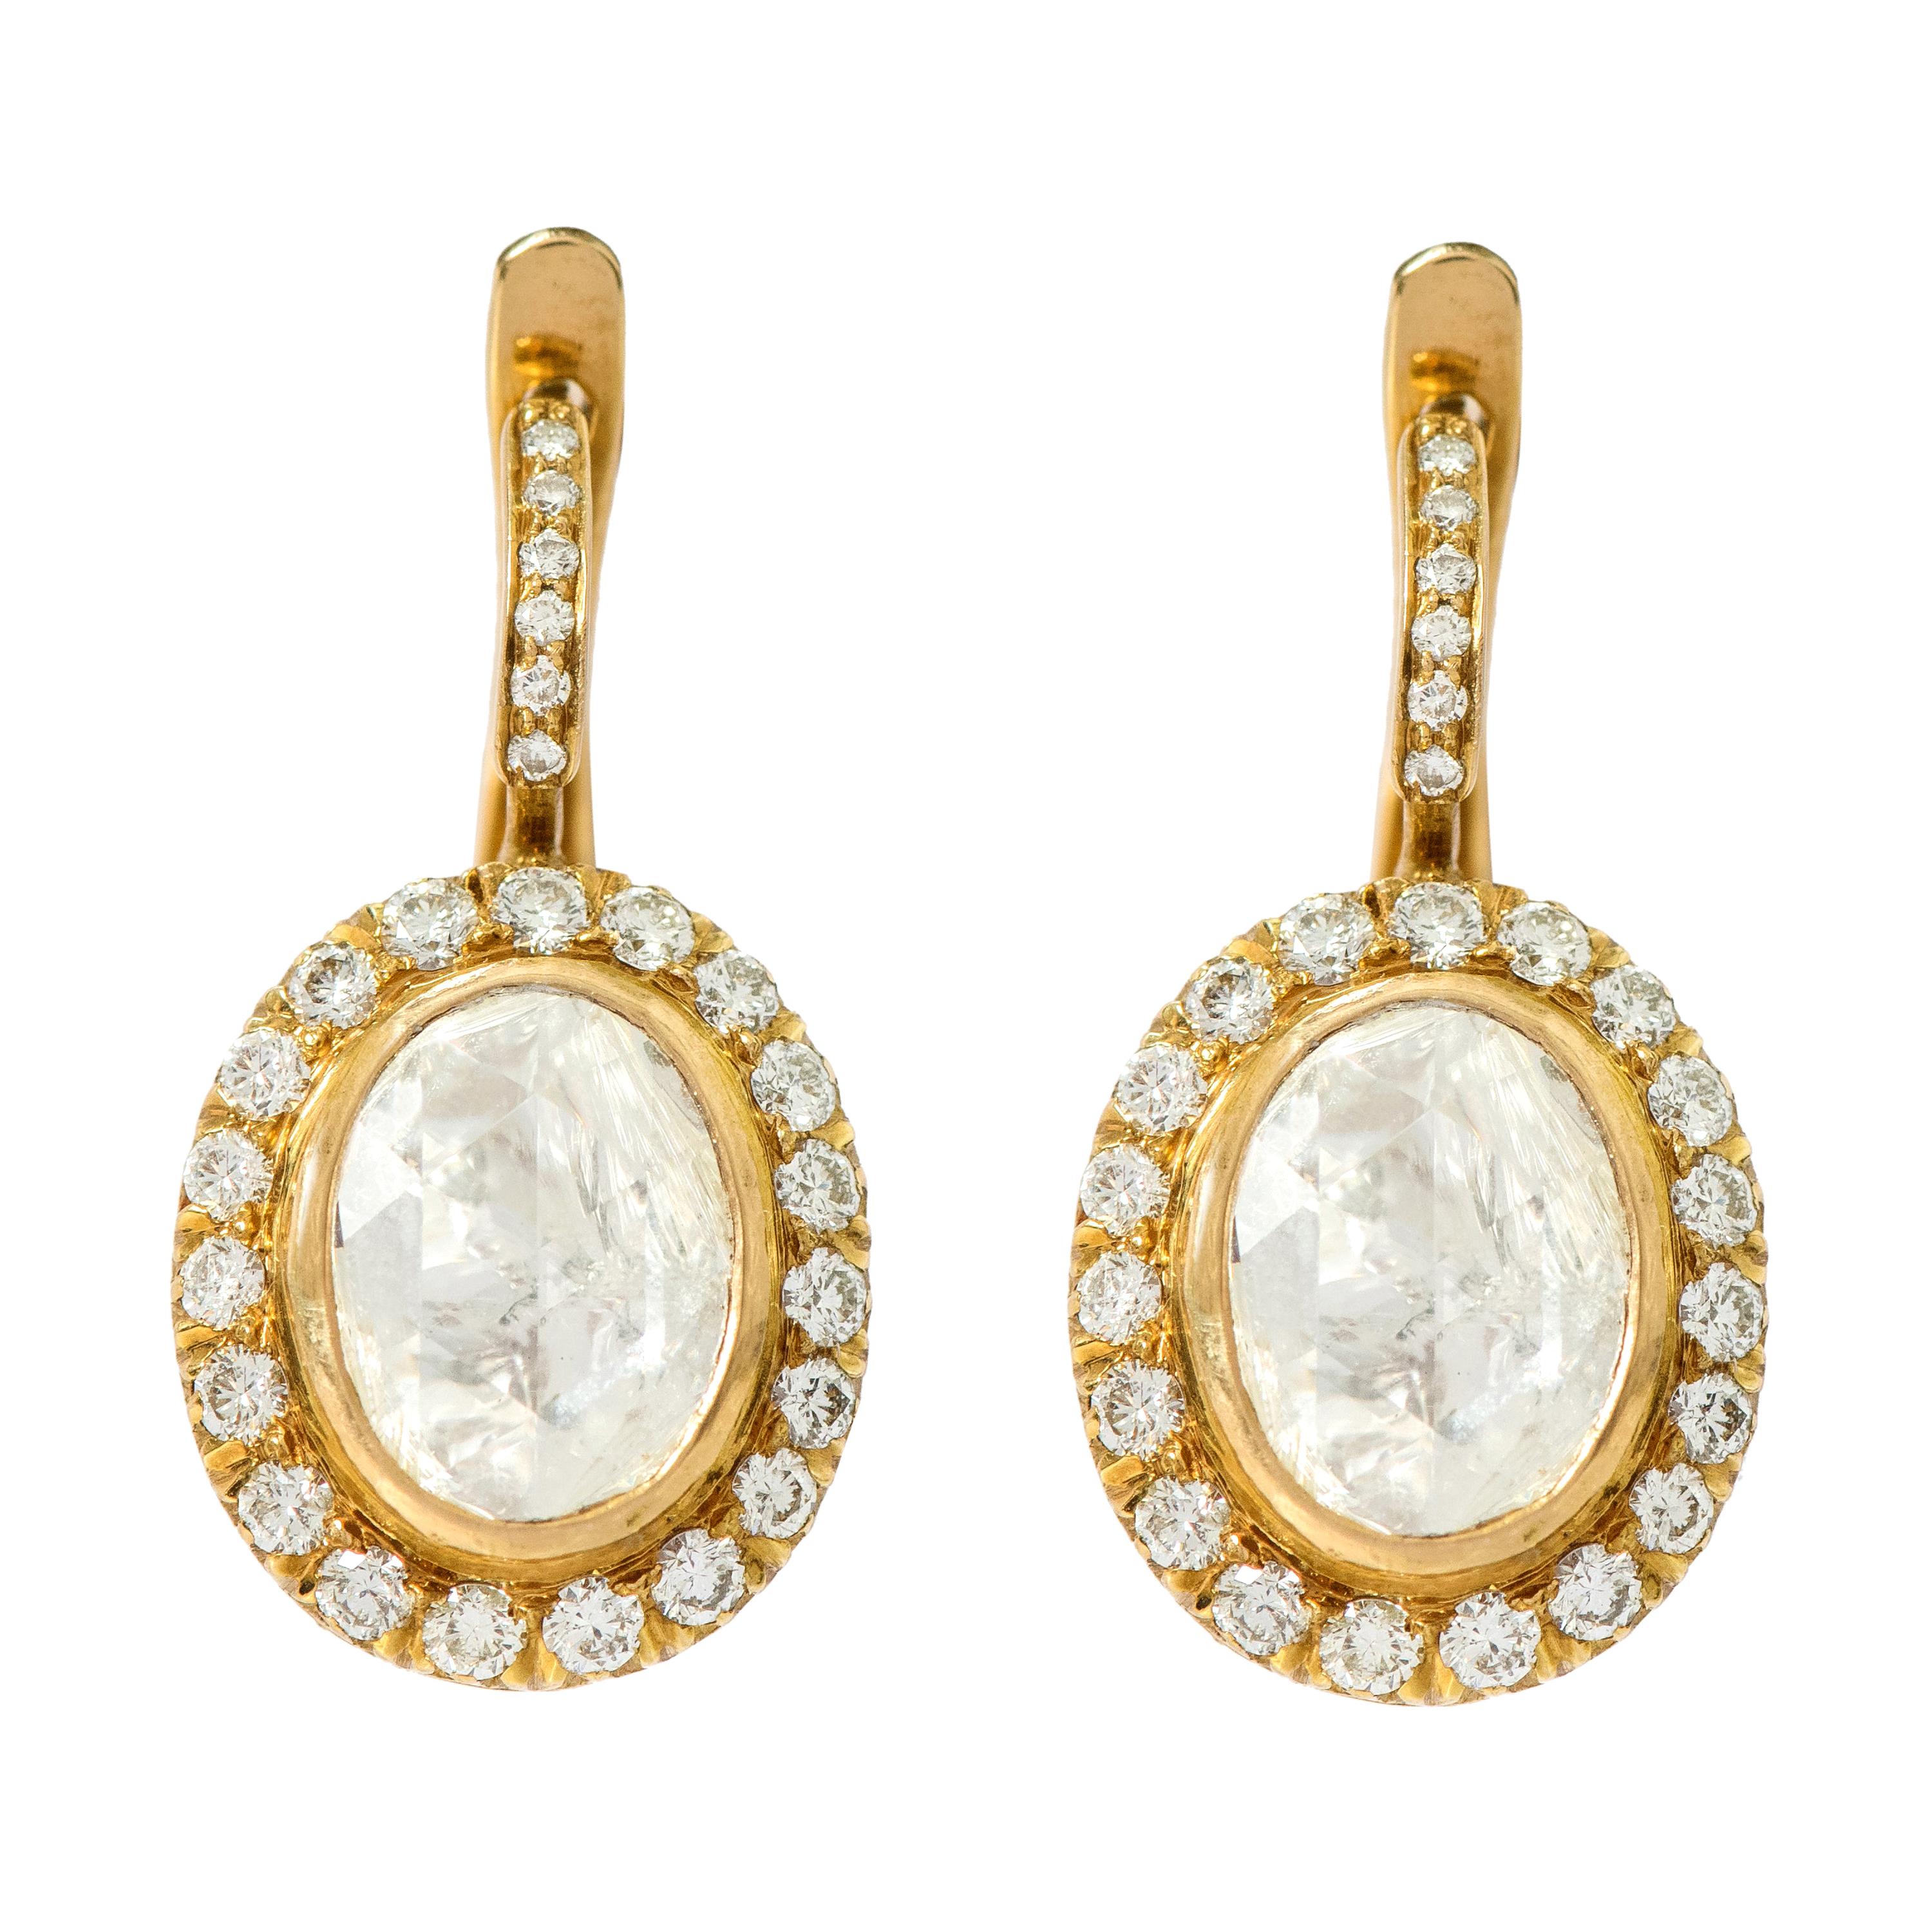 18 Karat Gold 4.03 Carats Solitaire Diamond Drop Earrings in Victorian Style